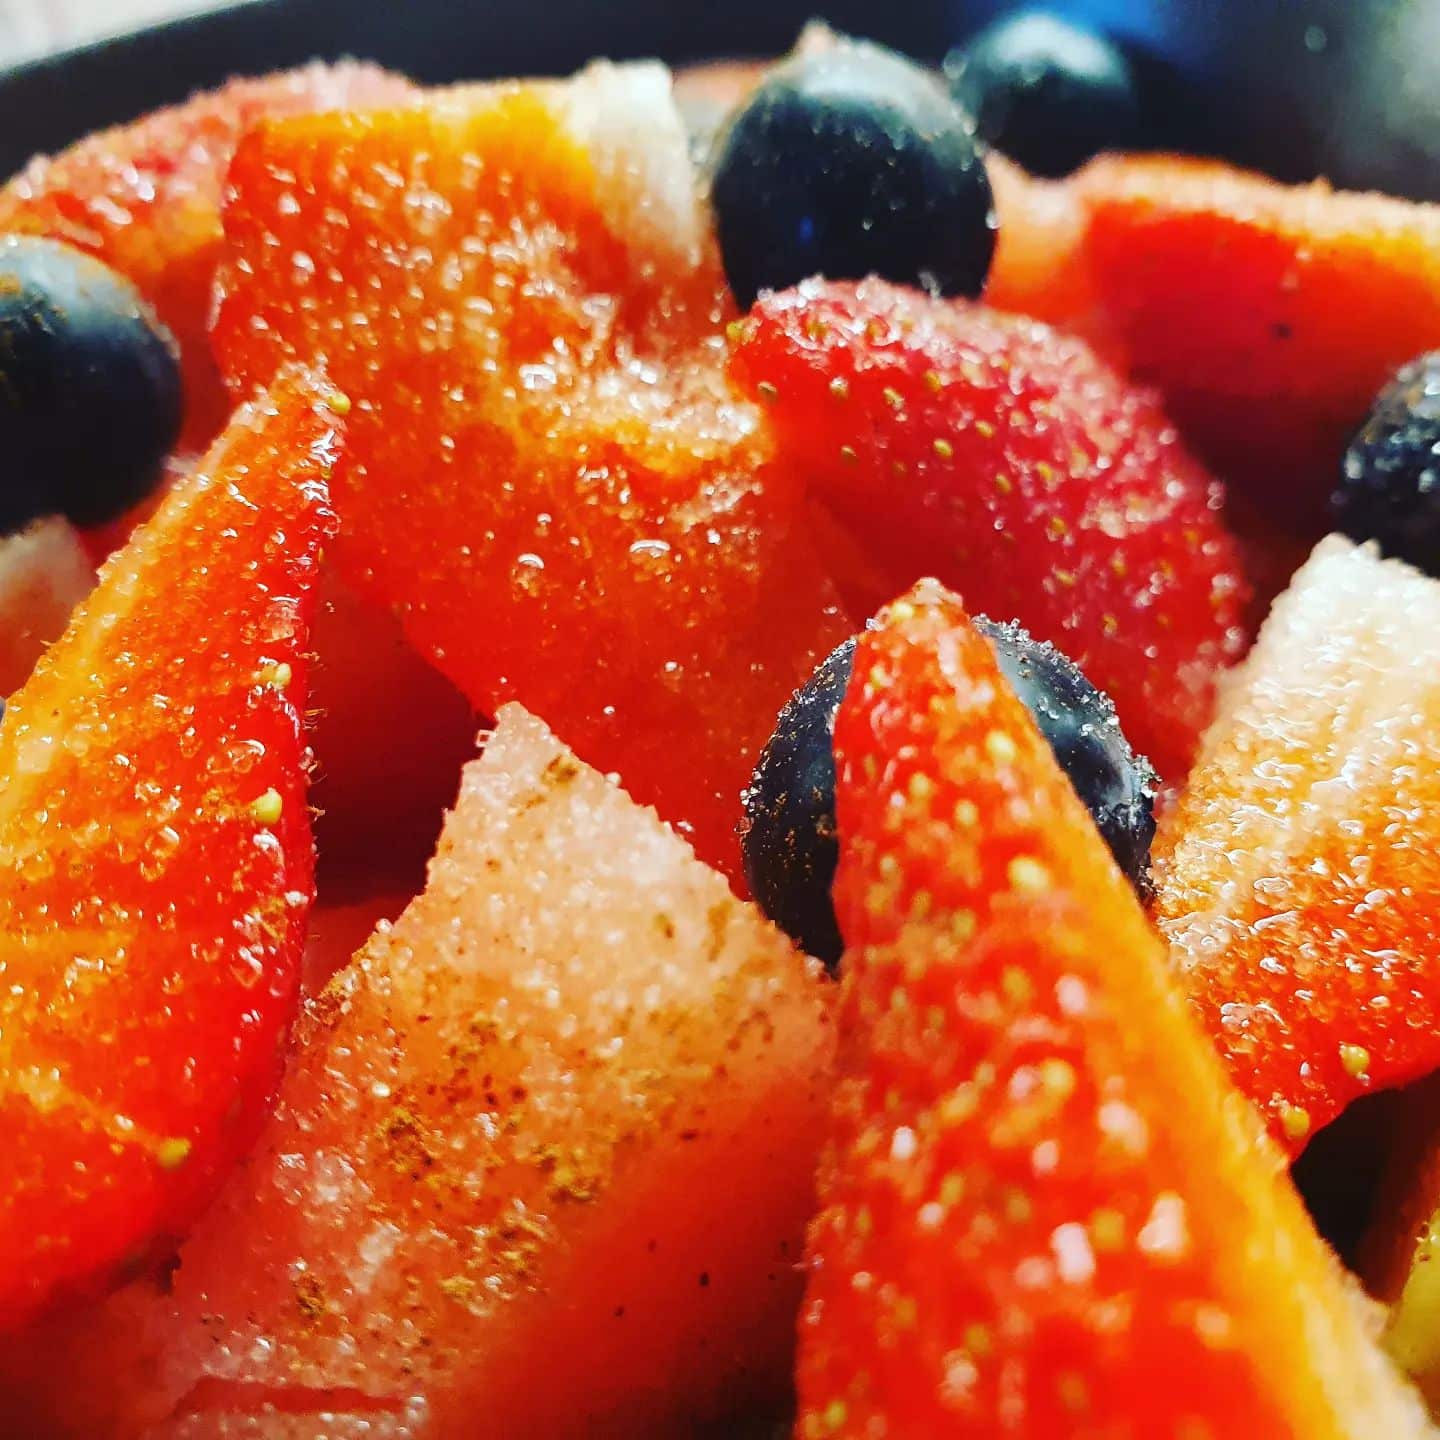 Pour ce matin une salade de fruit rouge frais pour contré cette chaleur !

#lelionvg #fruits #vegan #foodblog #veganfood #red #stramberry #fraises #foodie #foodlover #food #foodporn #foryou #morning #breakfast #love #summer #goodvibes #positivevibes